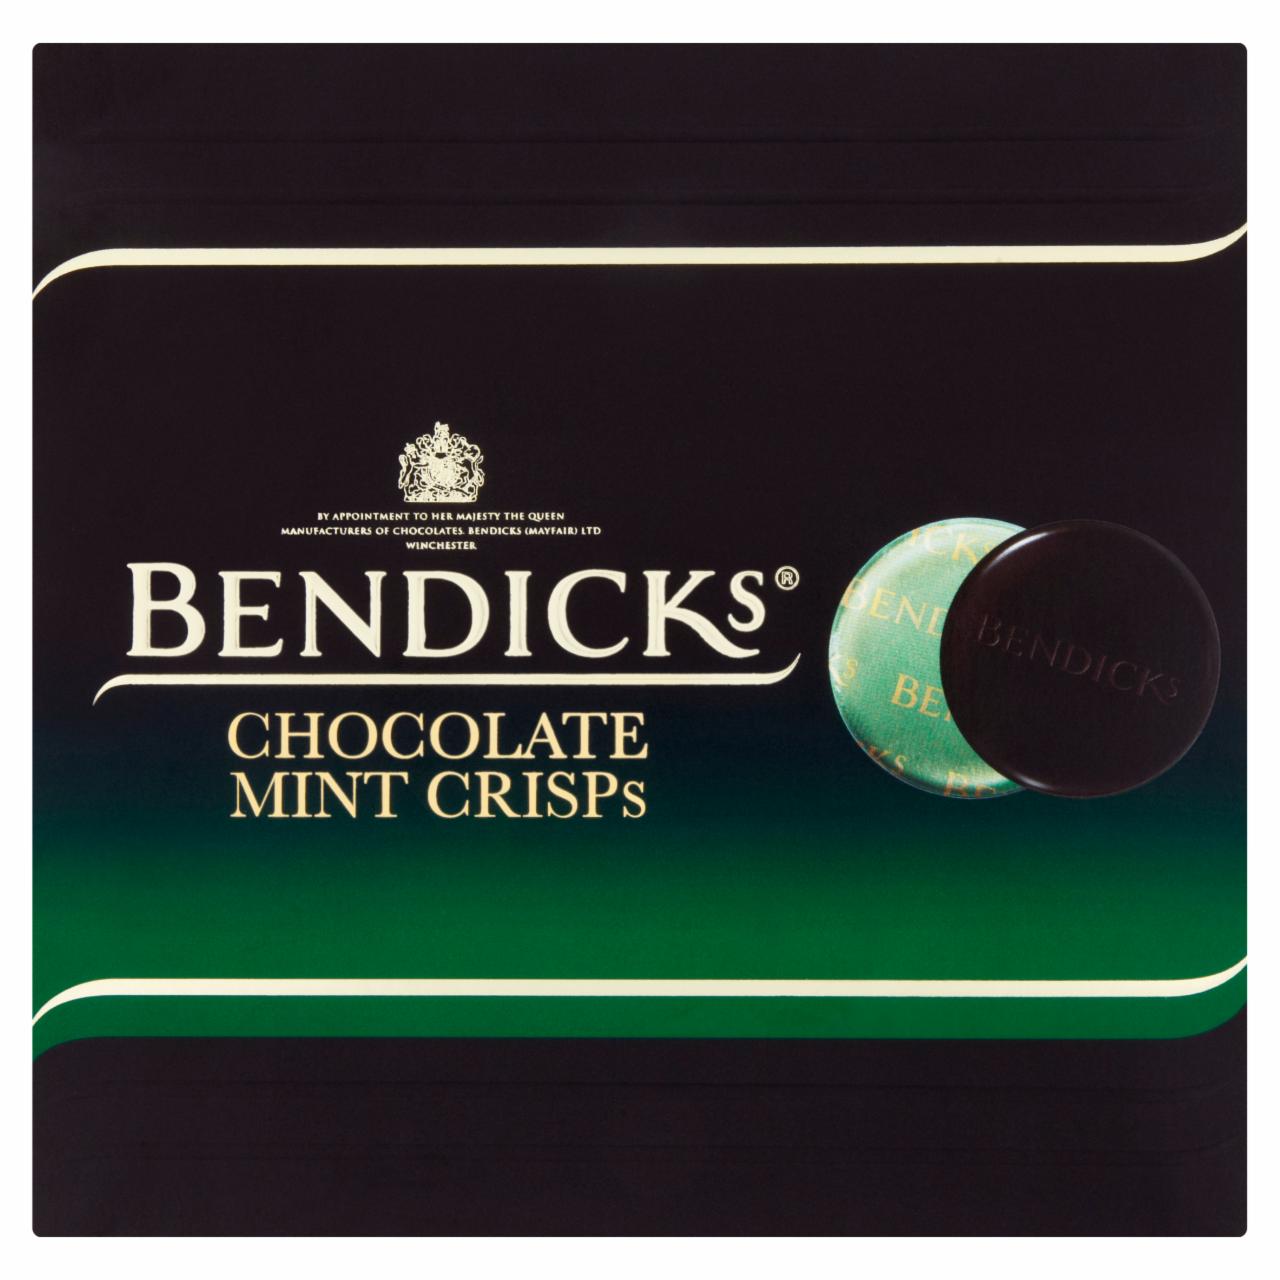 Képek - Bendicks Chocolate Mint Crisps étcsokoládé korong 160 g